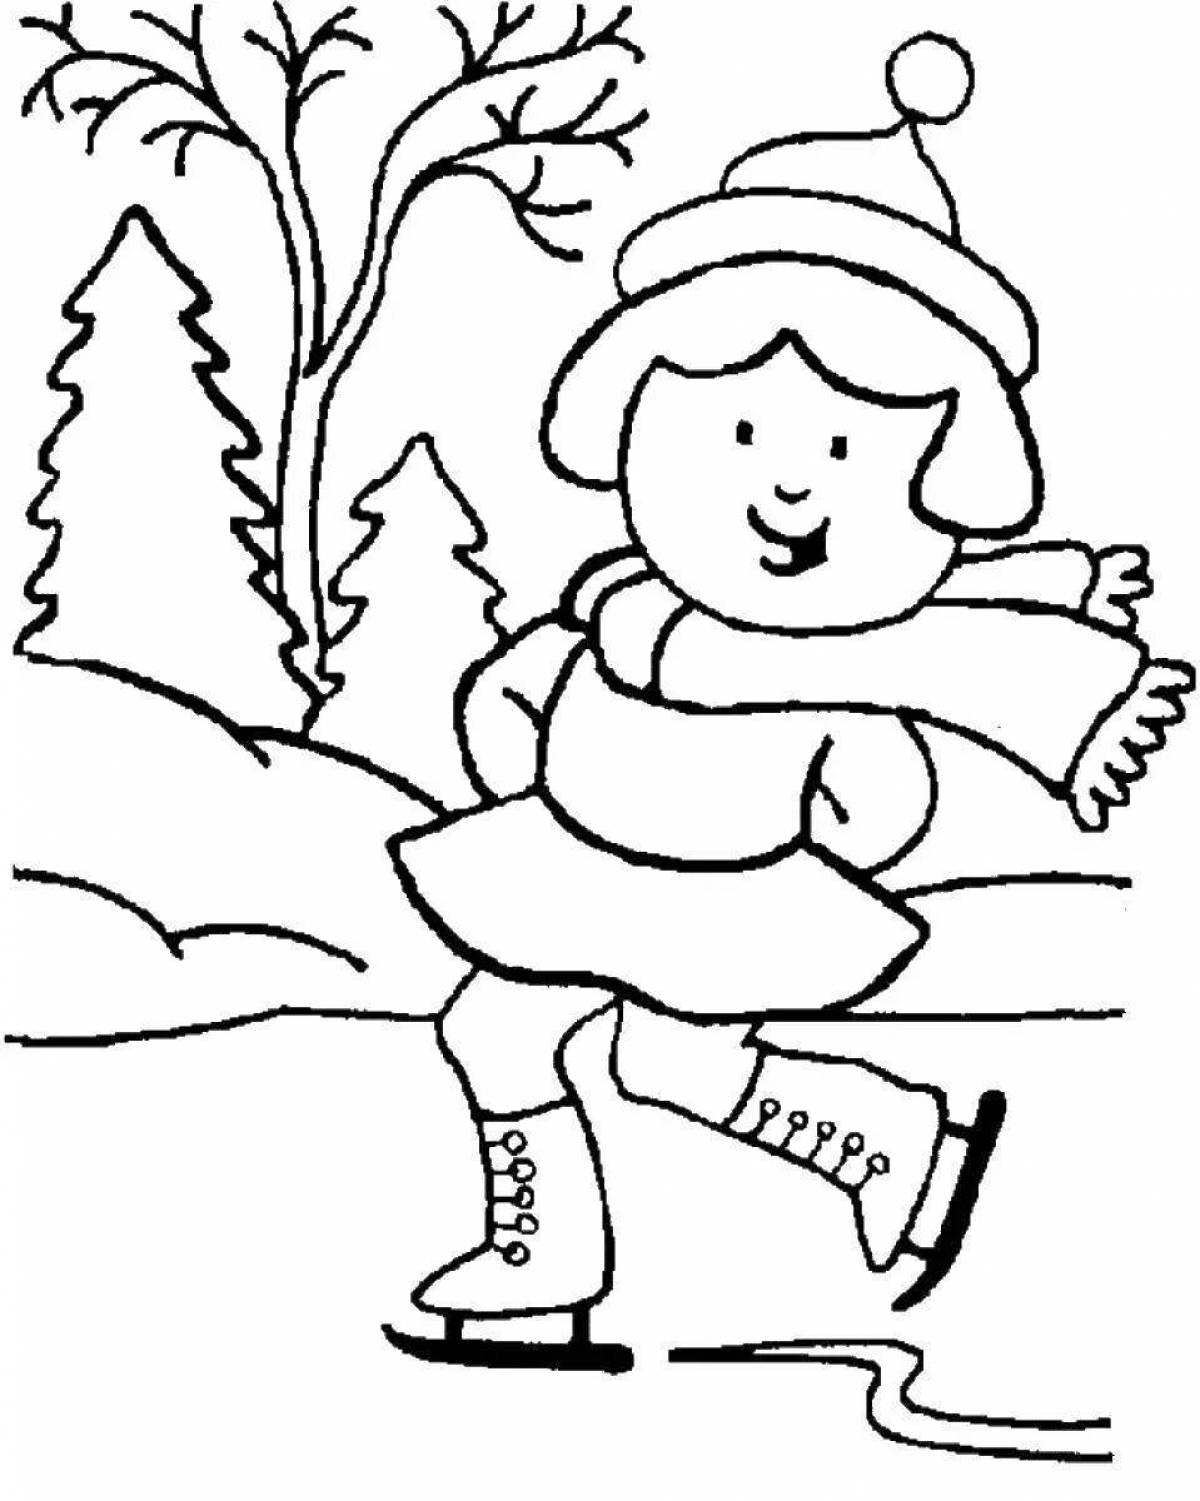 Fairy coloring winter fun for children 3-4 years old in kindergarten